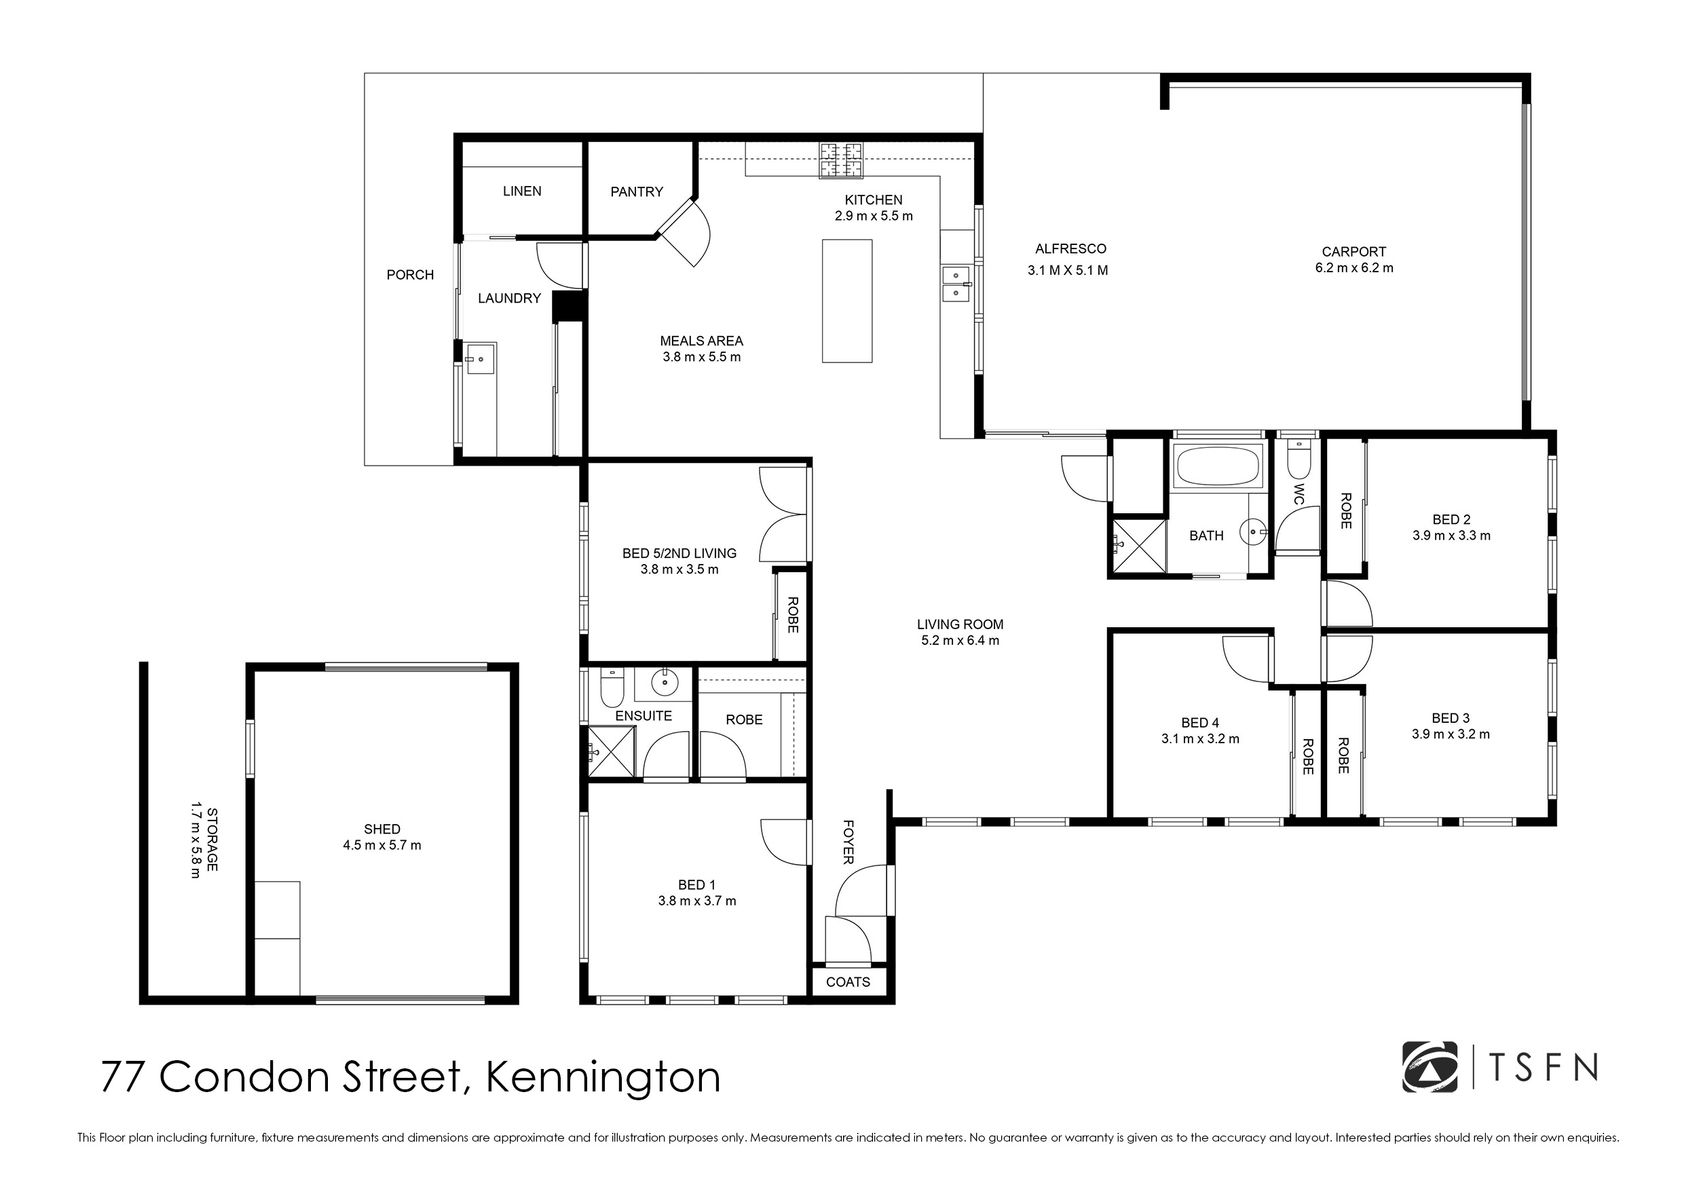 77 Condon Street floor plan